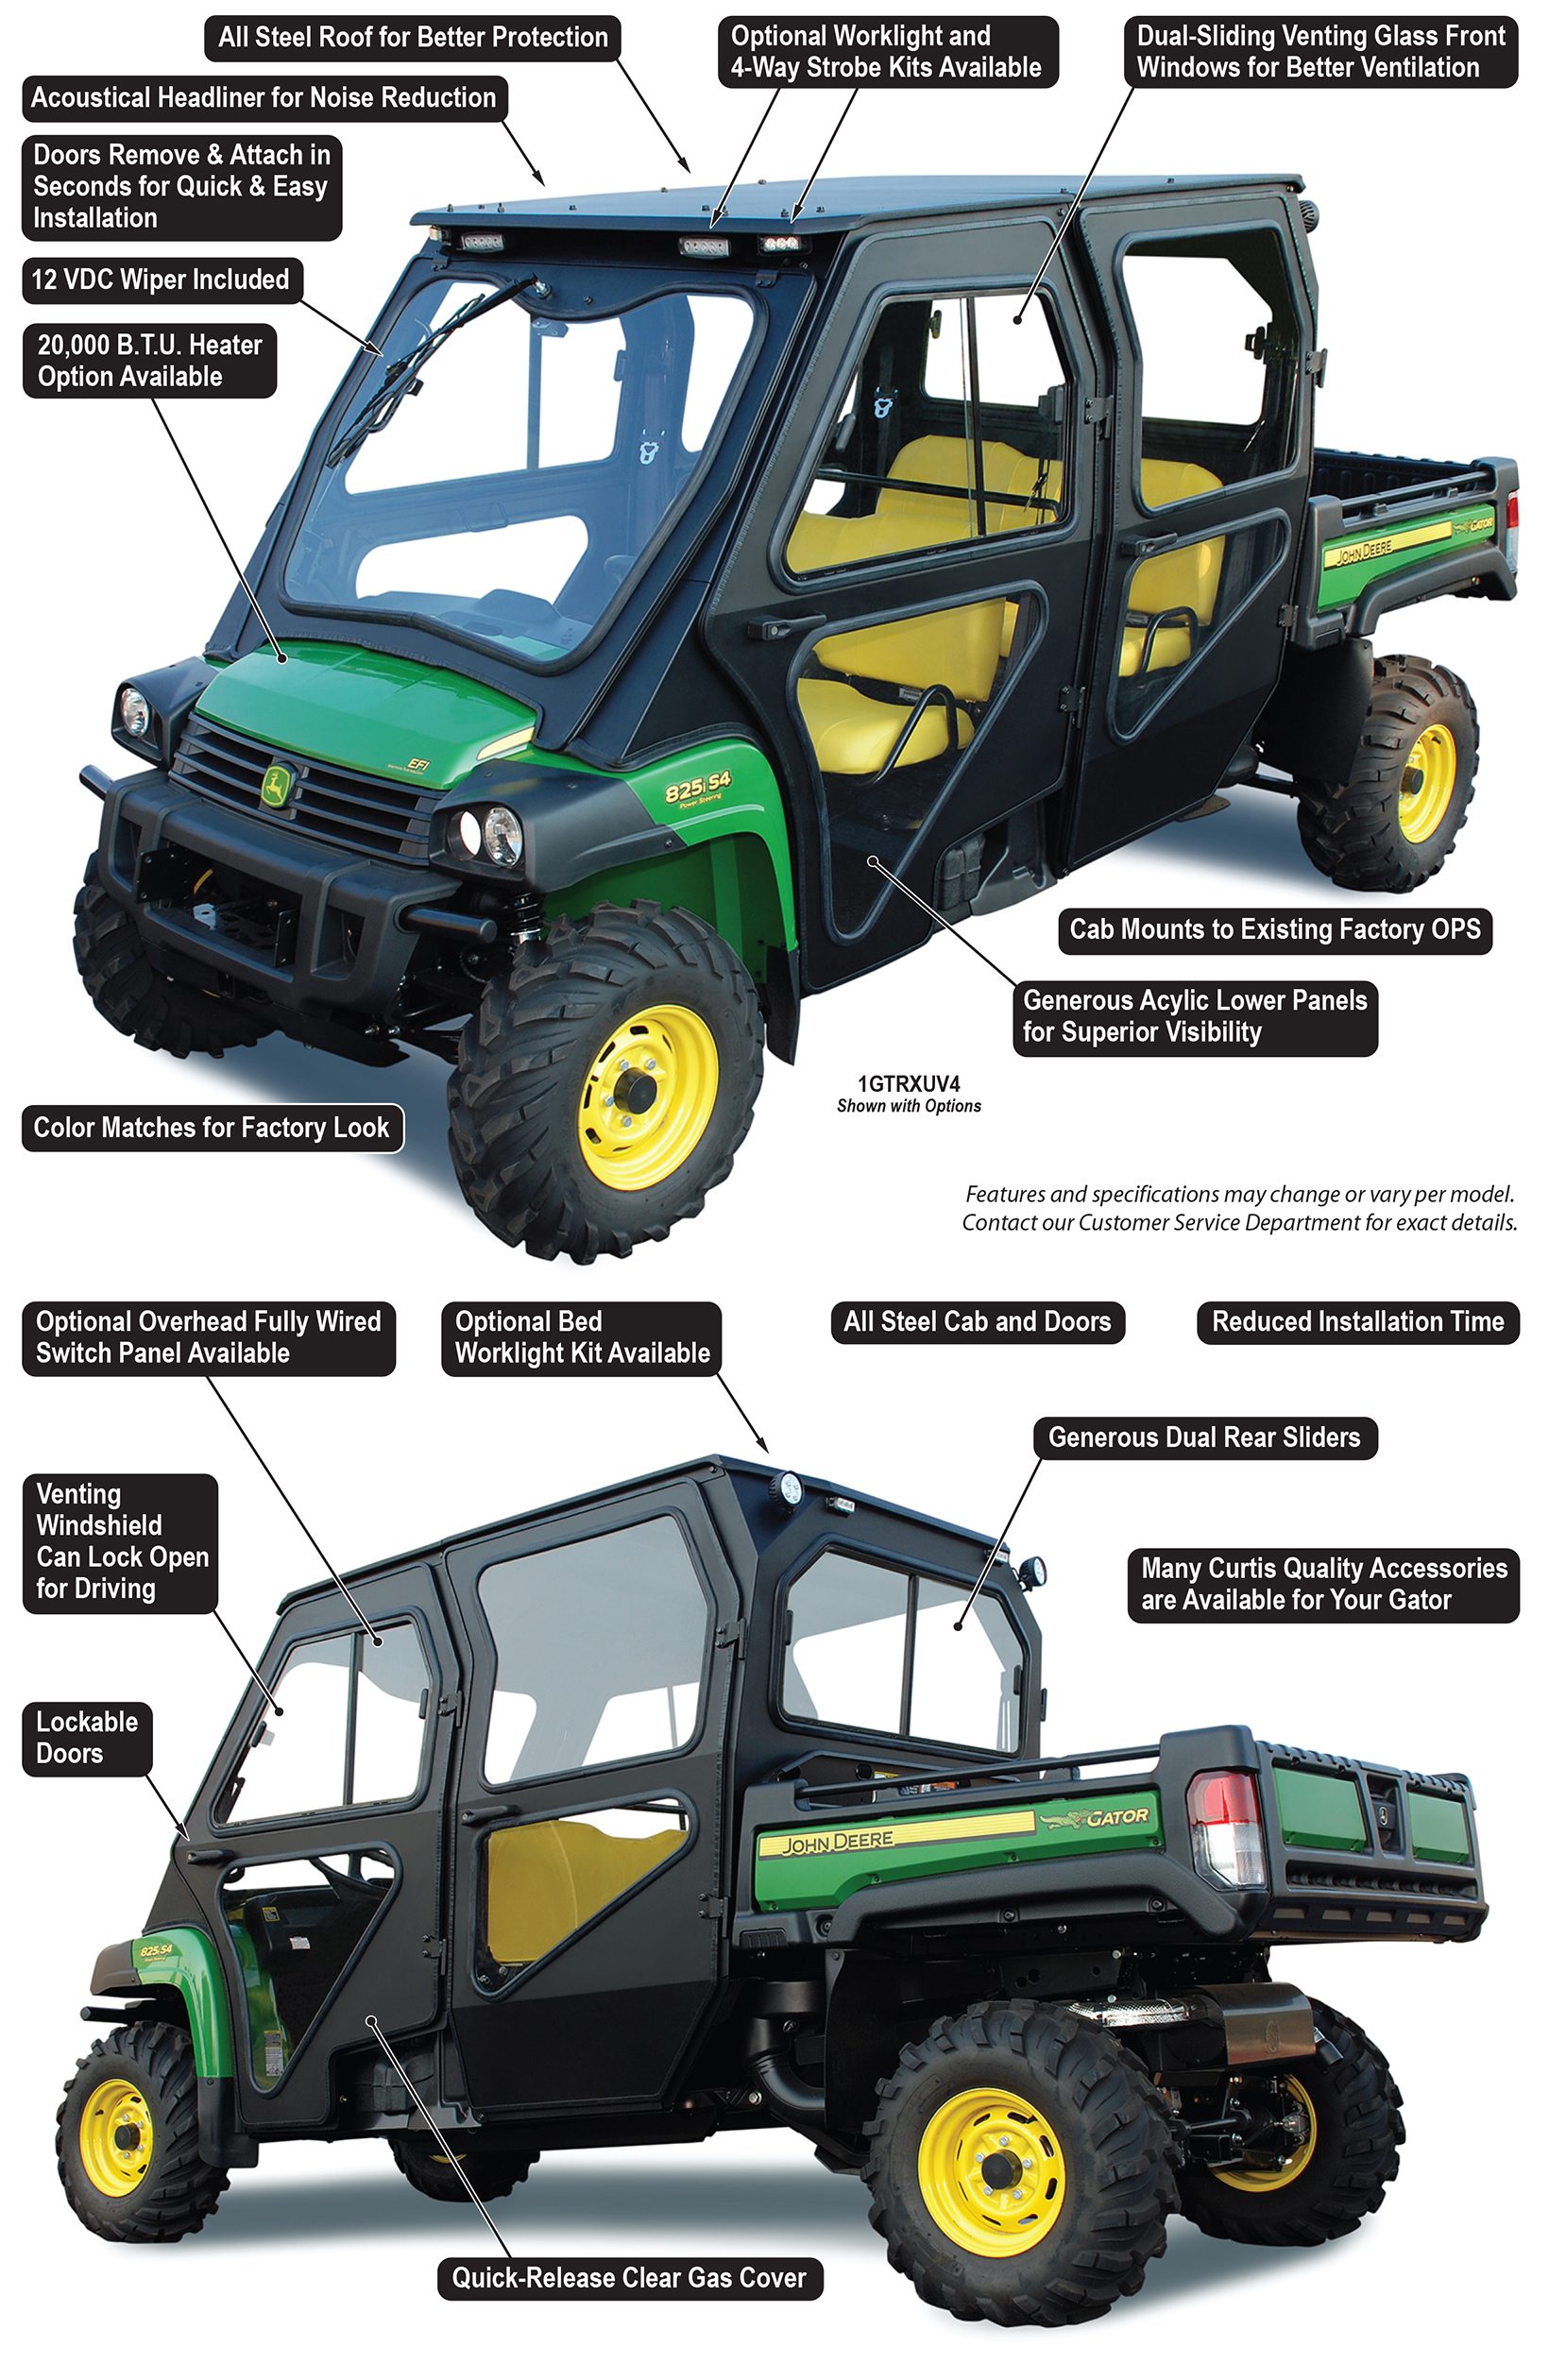 New John Deere Gator XUV 825i S4 All-Steel Cab | Curtis Industries | Pinterest | Tractor farming ...